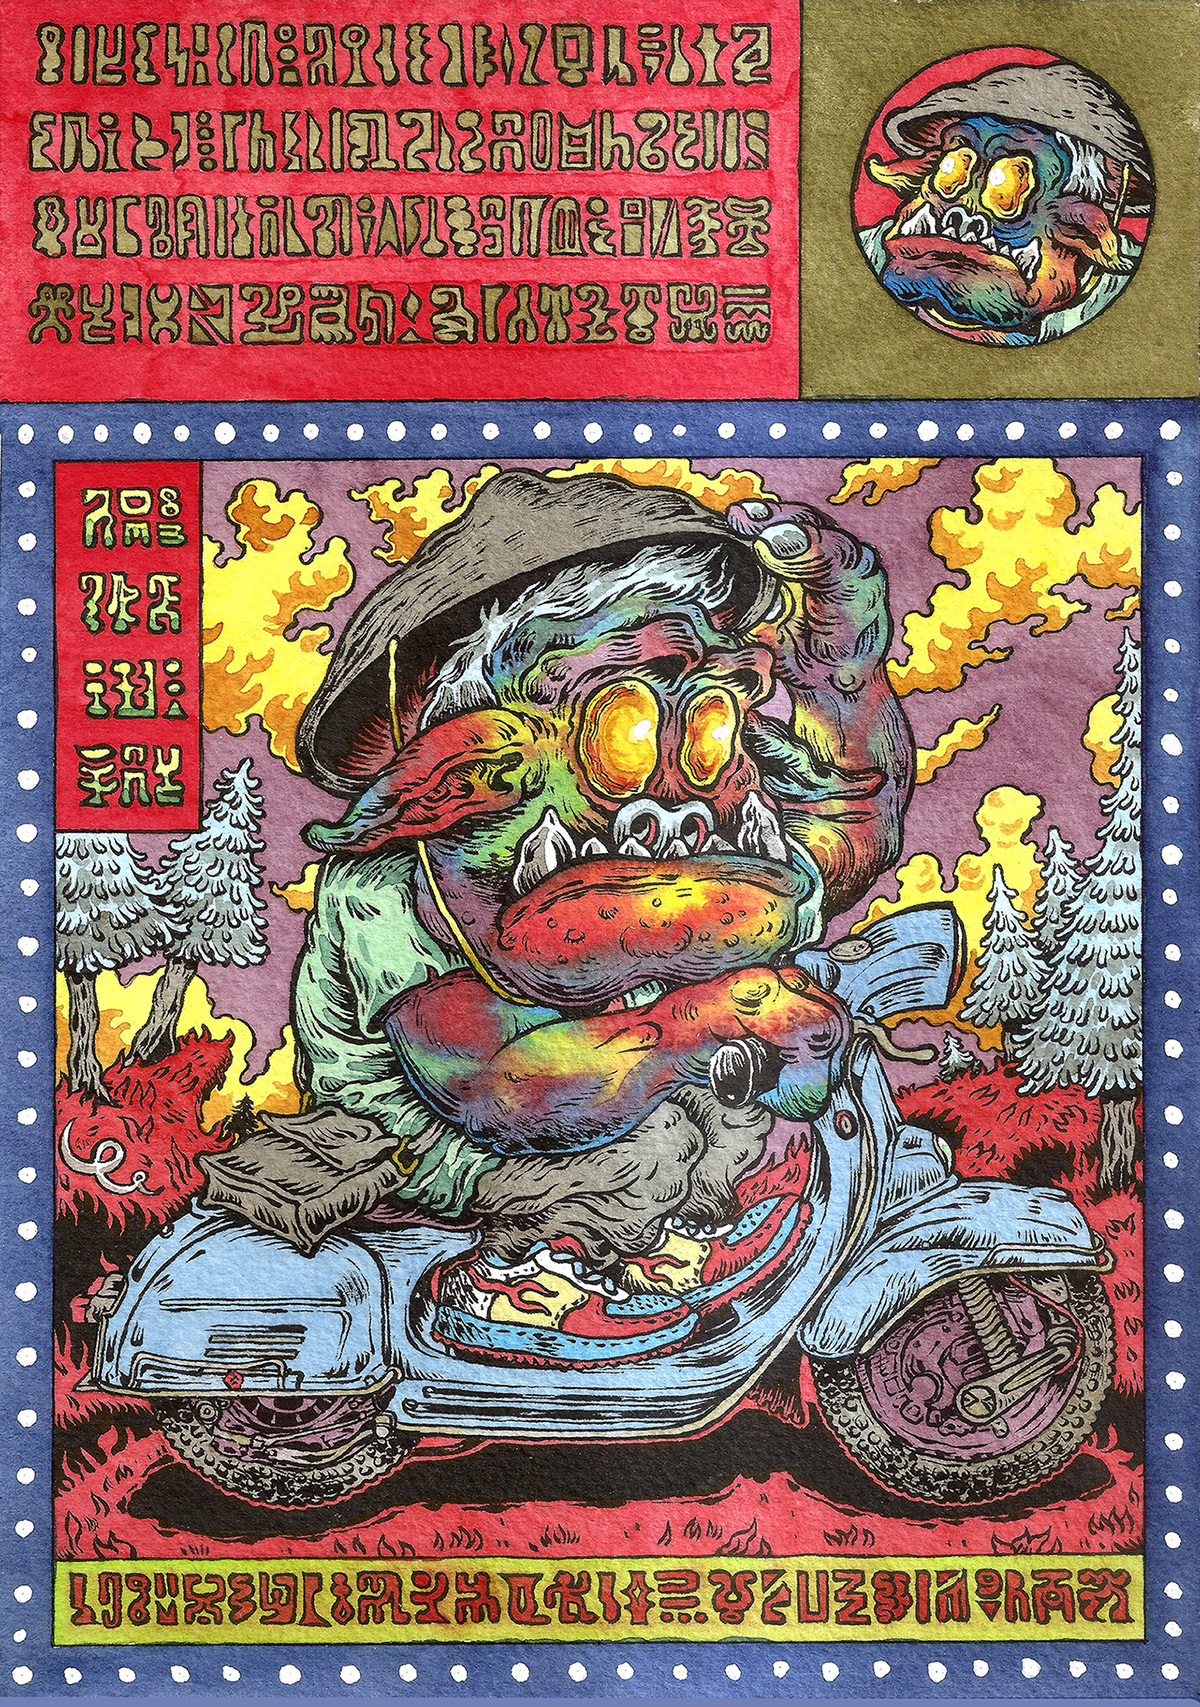 alien Scifi siencefiction boyane cards color watercolour comics vivid cover Fun bd French Korea